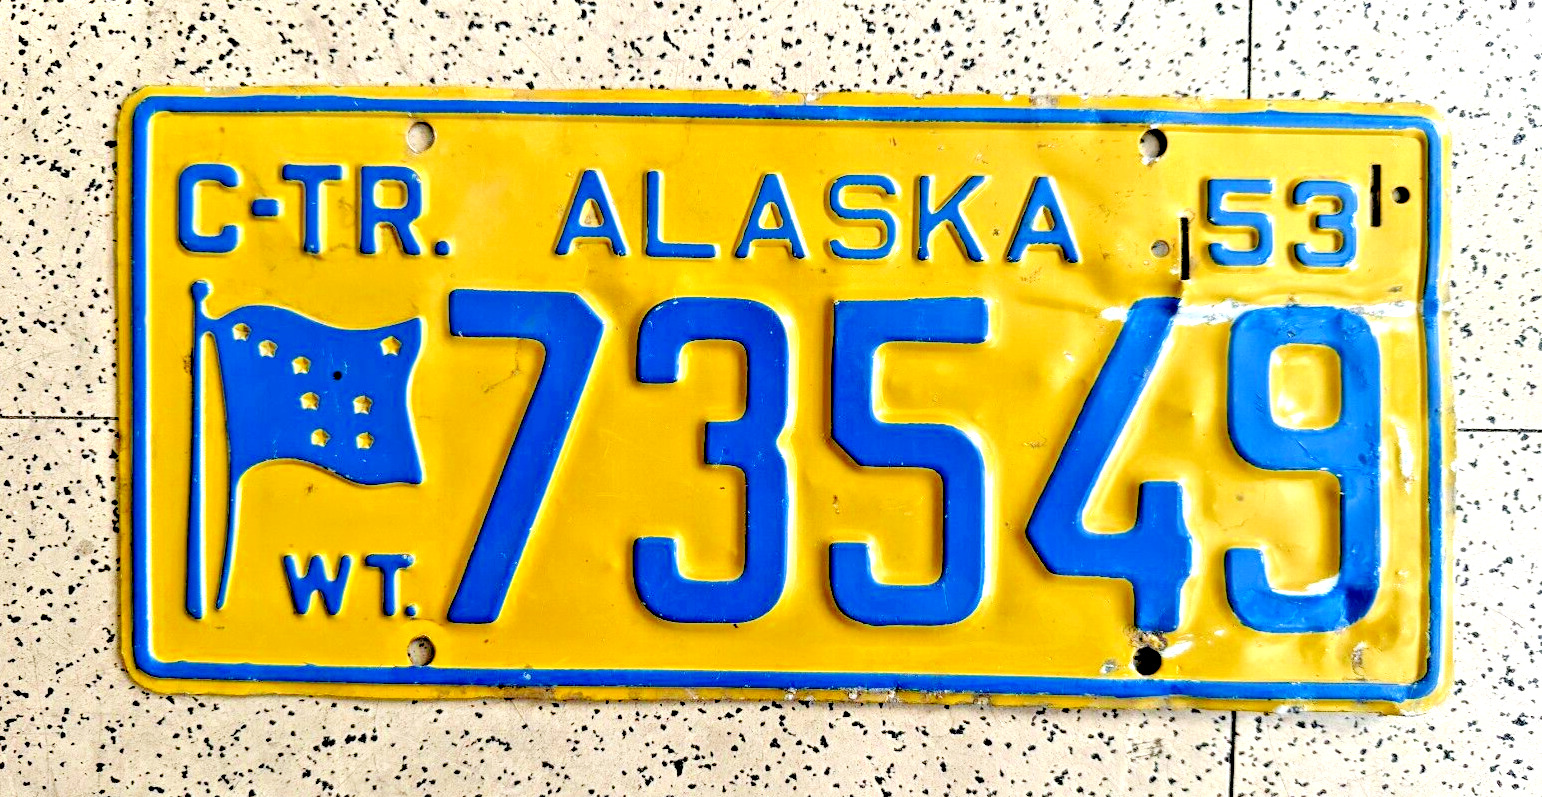 1953 ALASKA license plate — ORIGINAL BRILLIANT SUPERB vintage antique auto tag